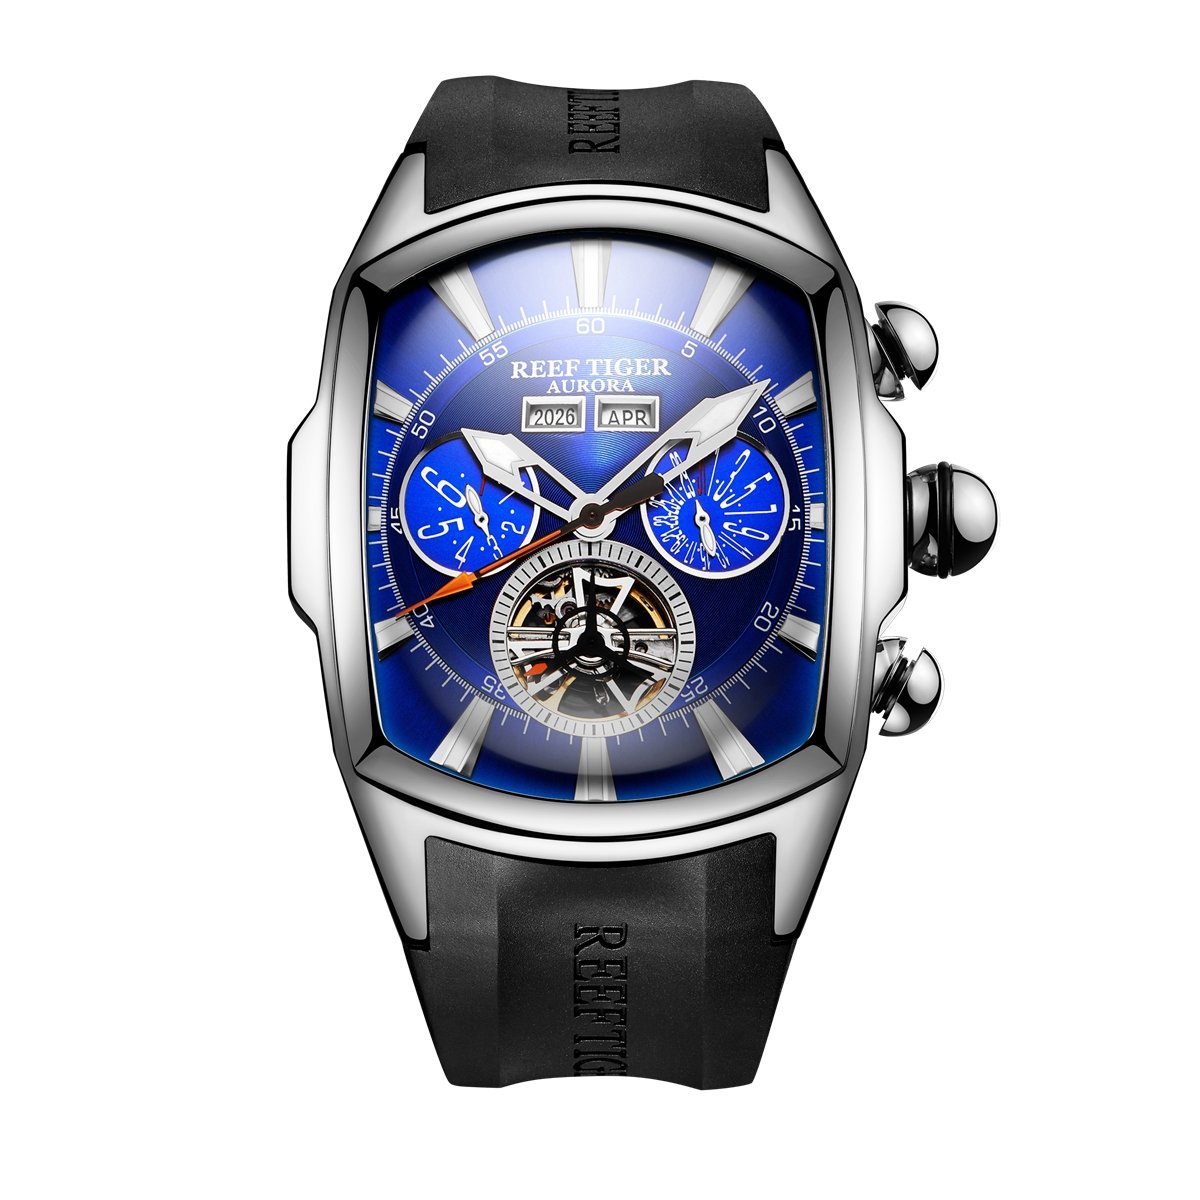 REEF TIGER Luminous Huge Big Sport Watch for Men Tourbillon Analog Automatic Watches Rubber Strap RGA3069